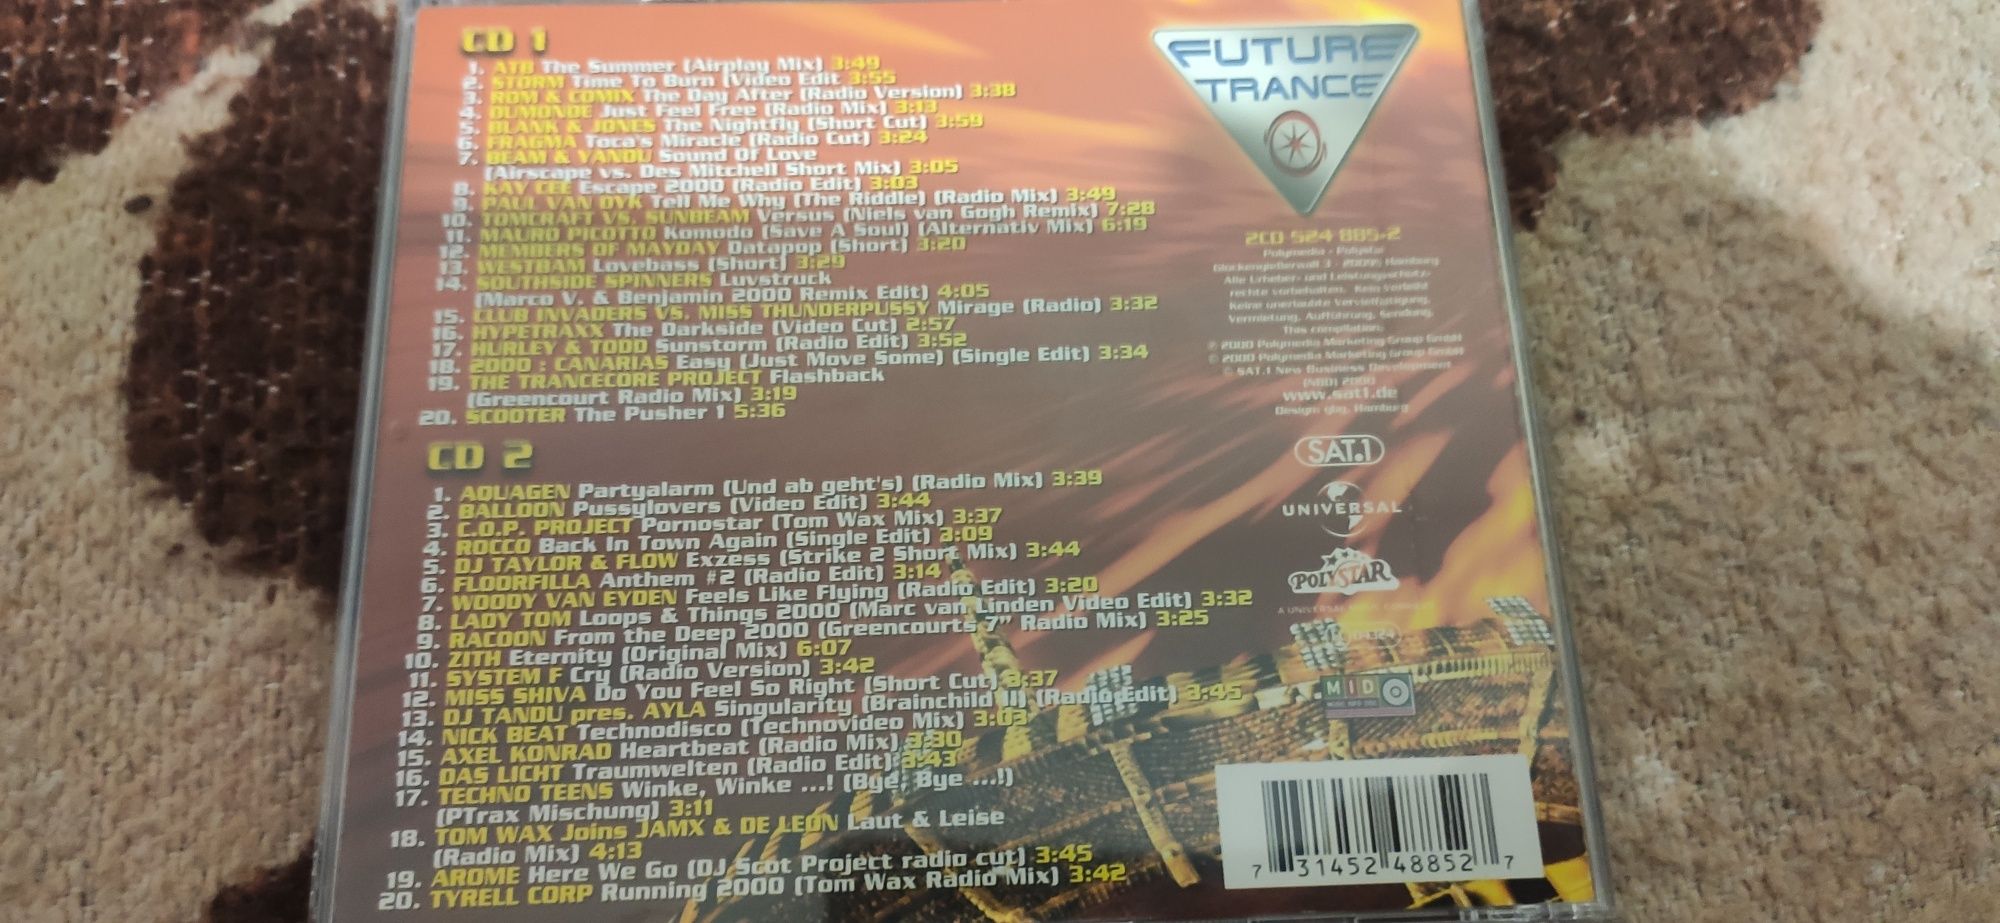 Lot CD Future Trance techno house music